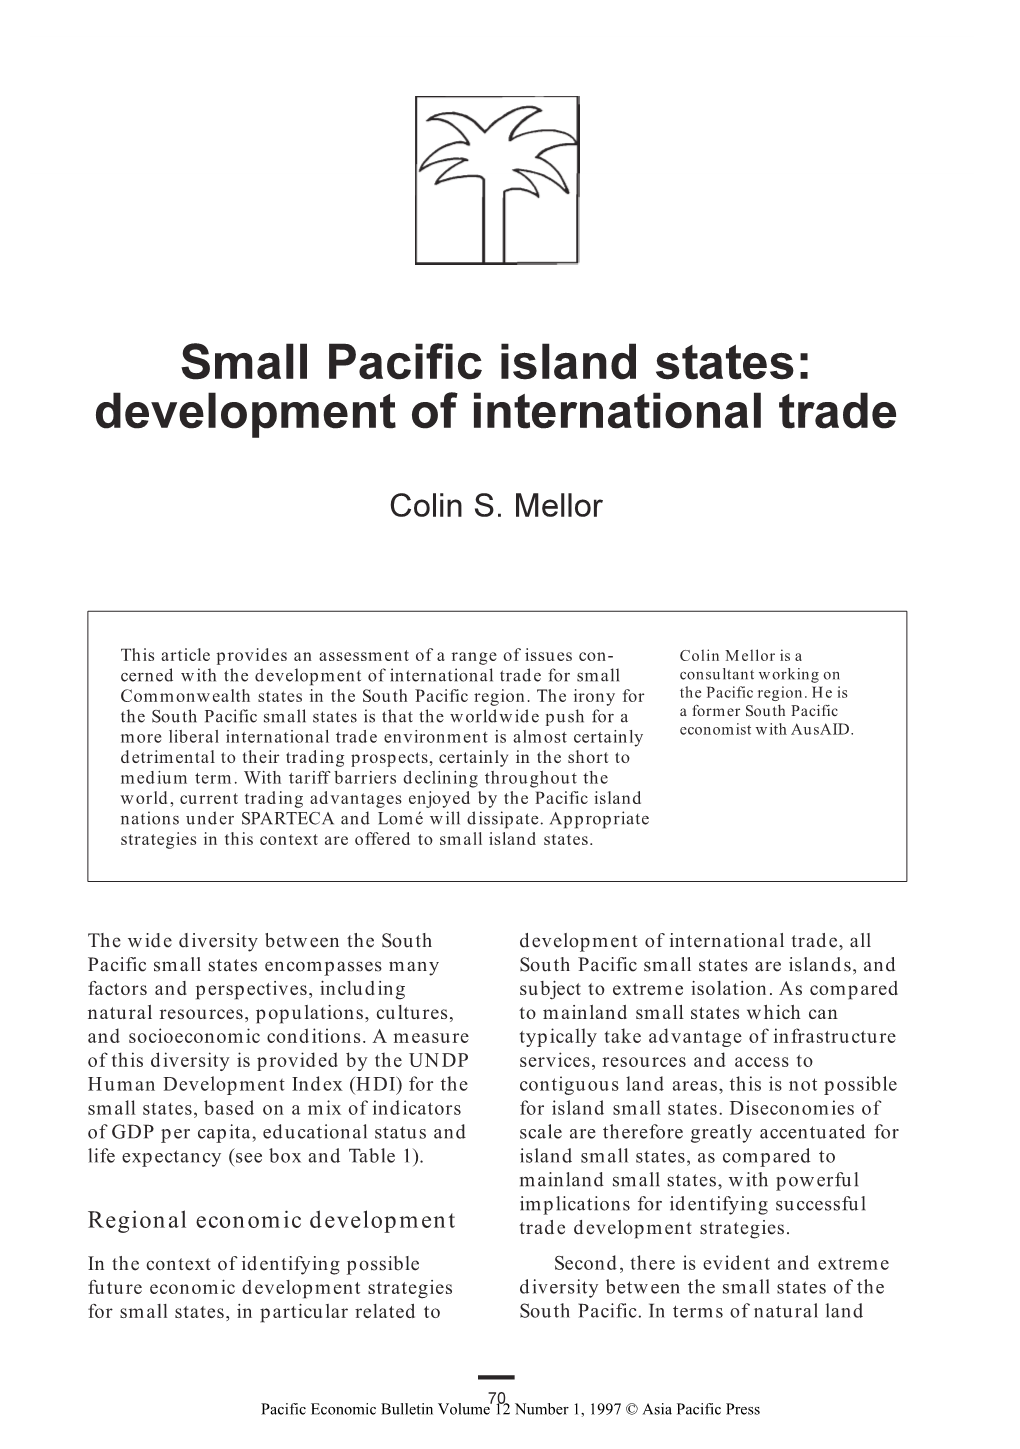 Small Pacific Island States: Development of International Trade